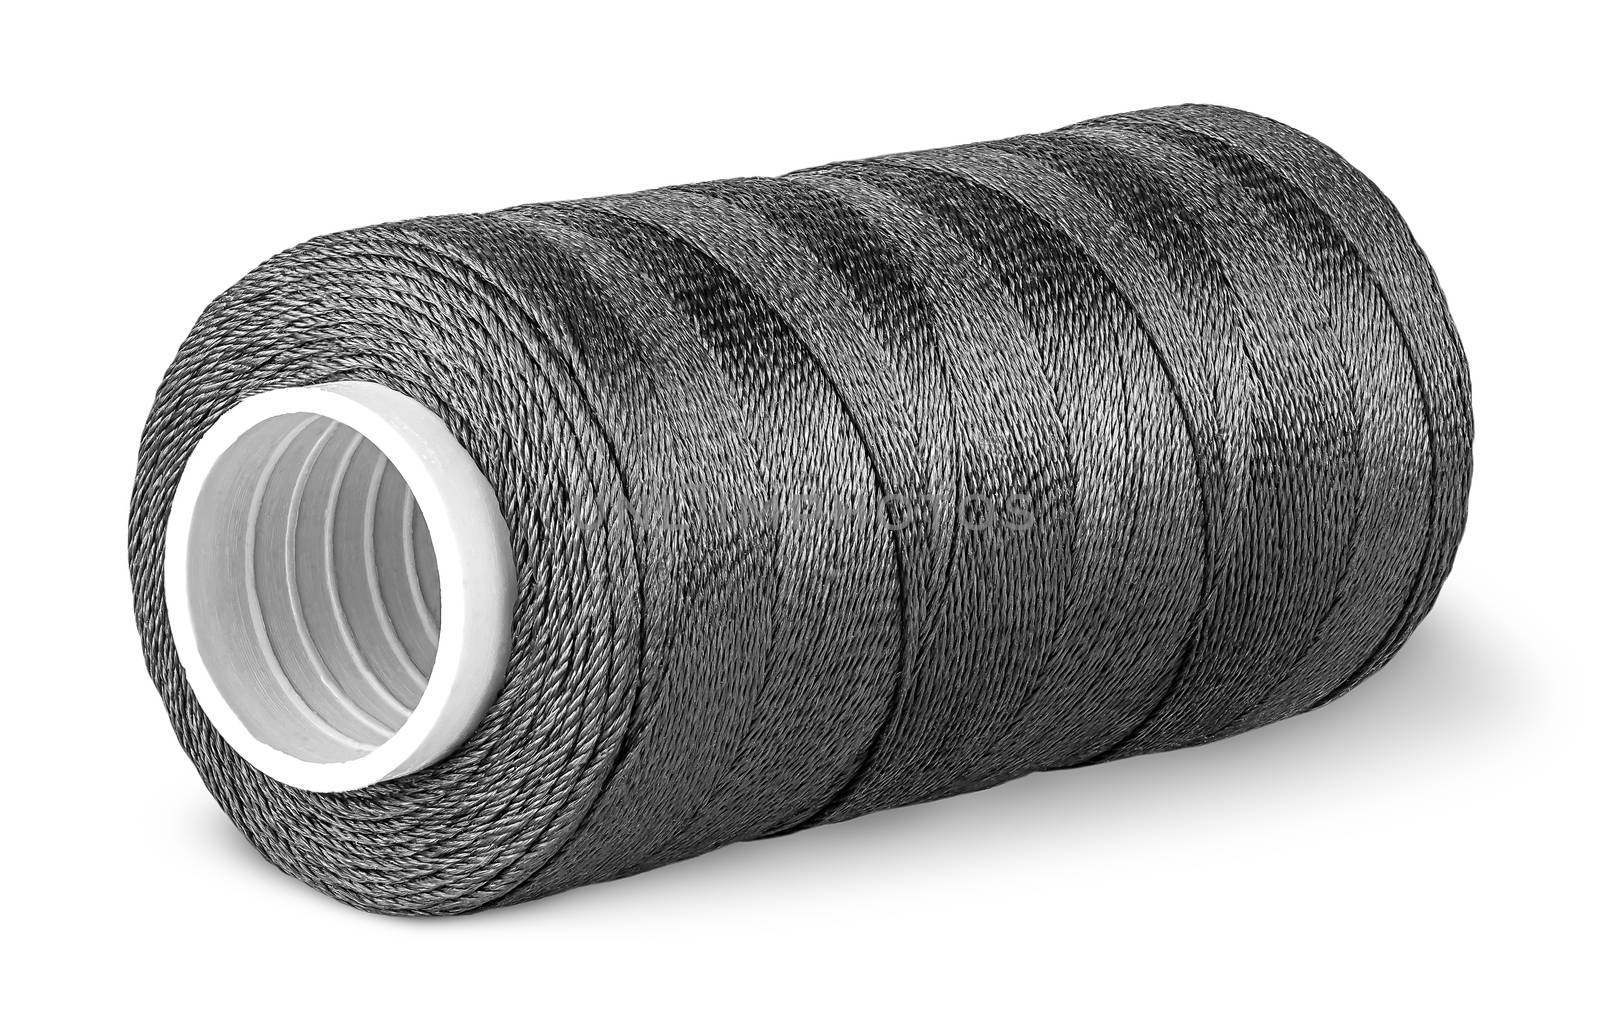 Black thread on the coil horizontally by Cipariss